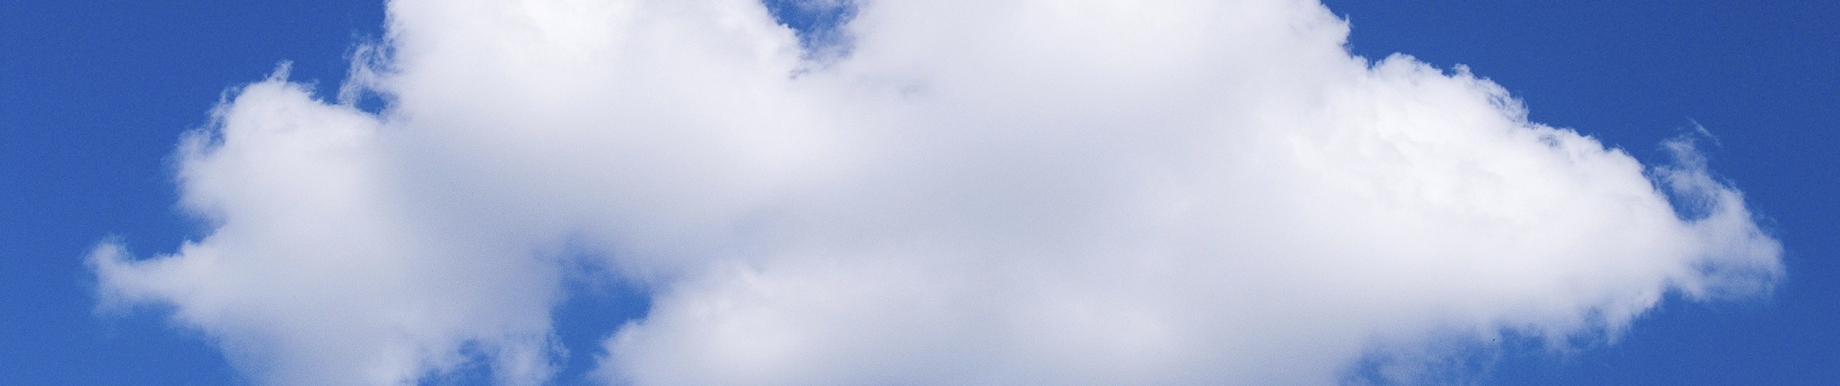 A Single White Cloud Against A Blue Sky